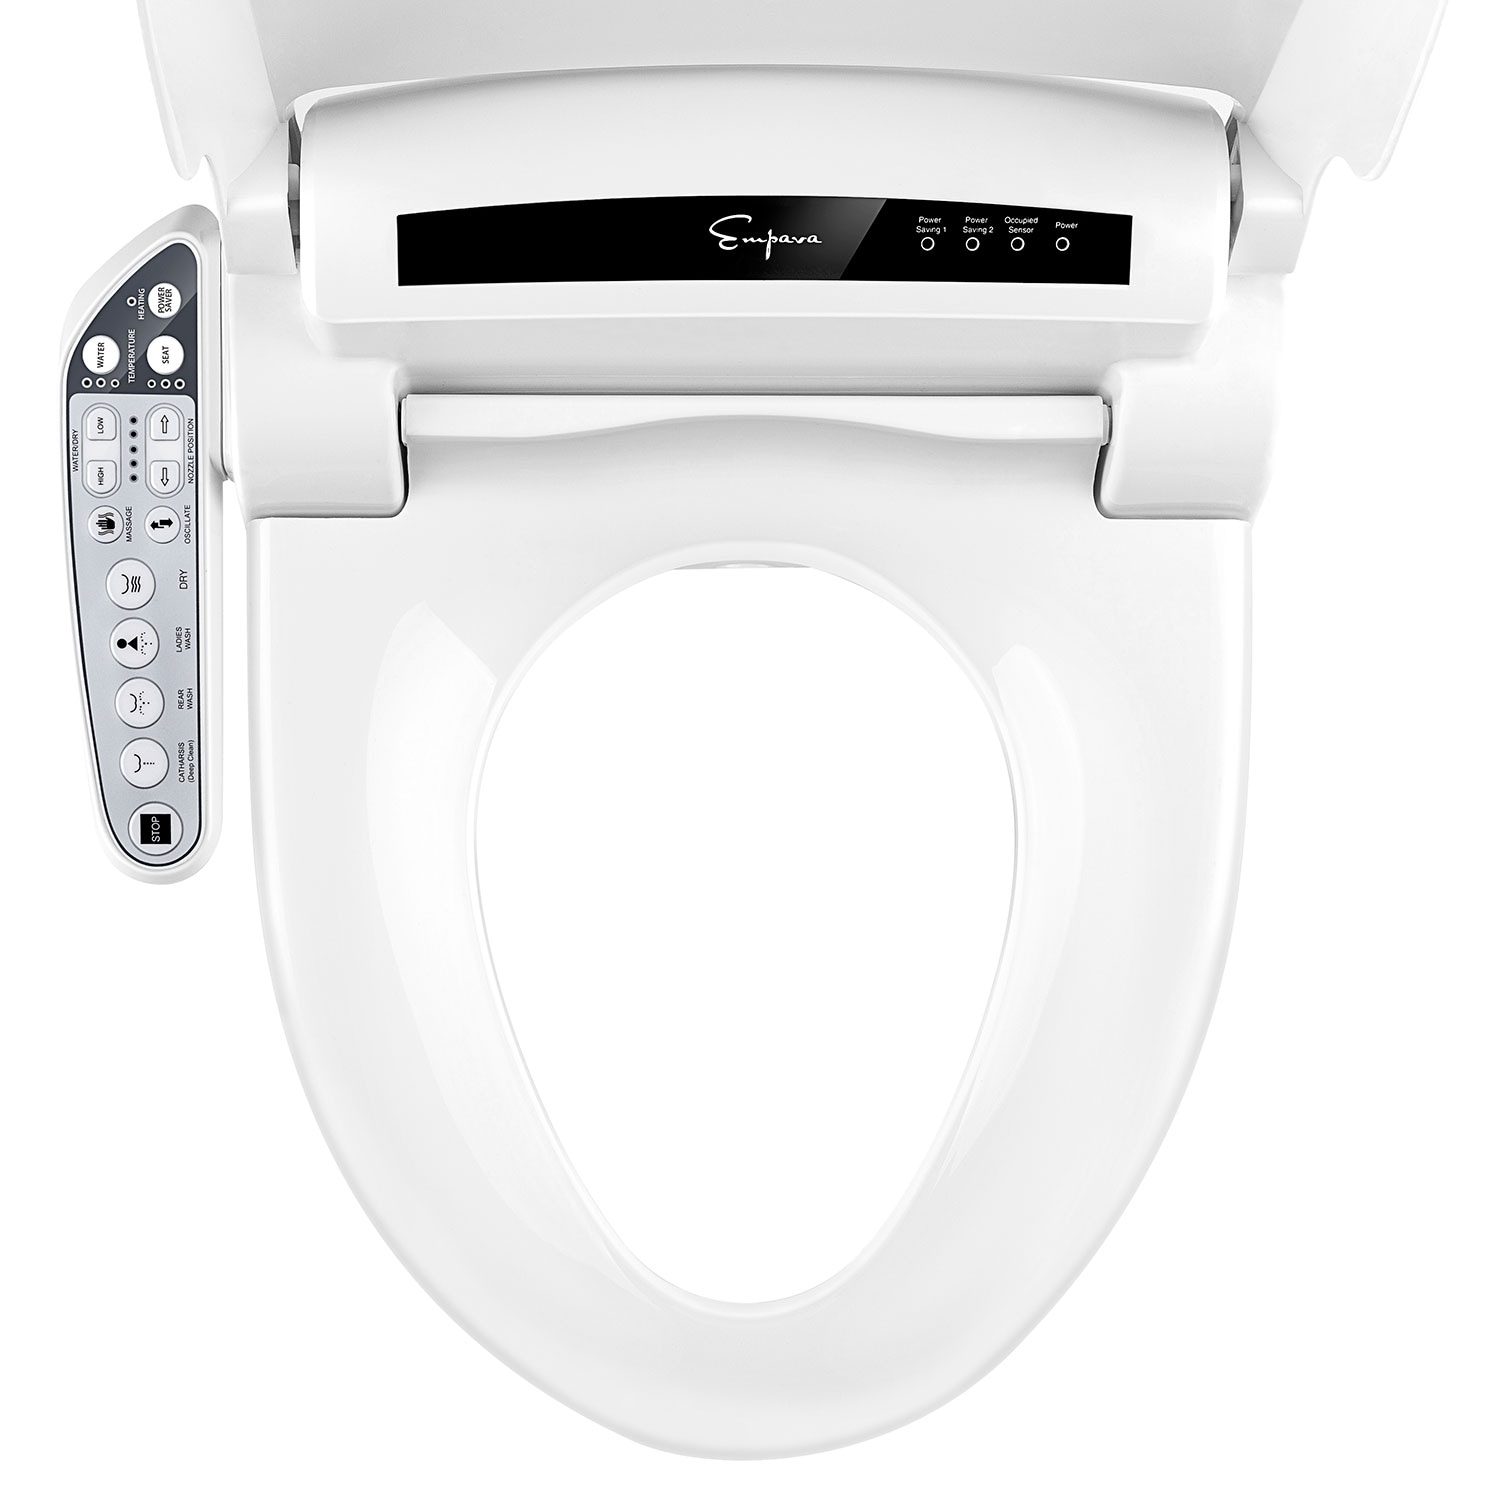 KE KING Elongated Toilet Seat Bidet & Reviews